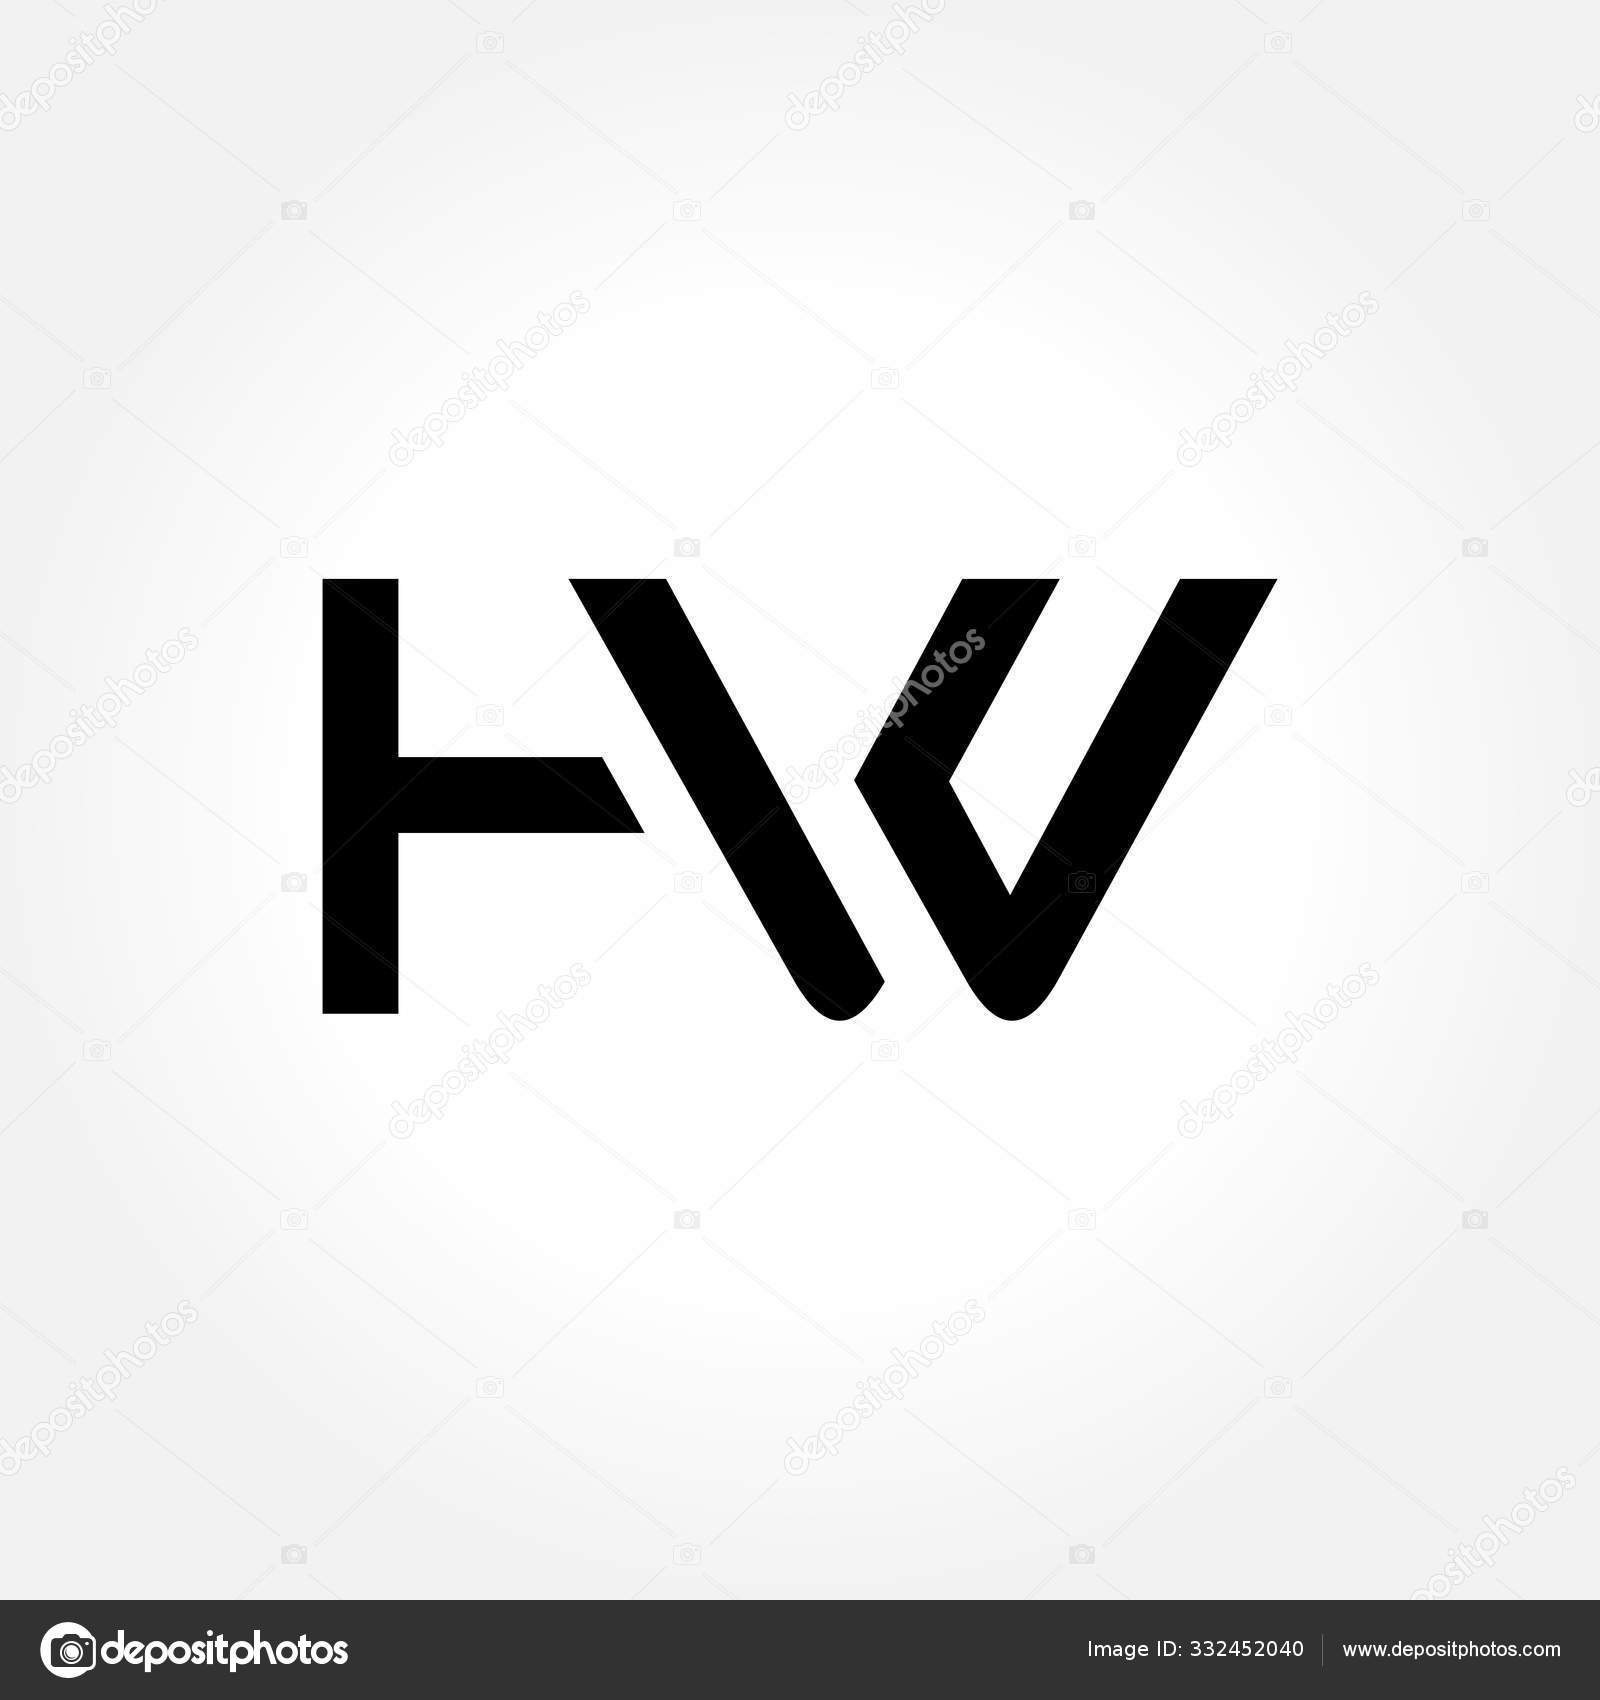 HW Logo Design by Dian studio on Dribbble